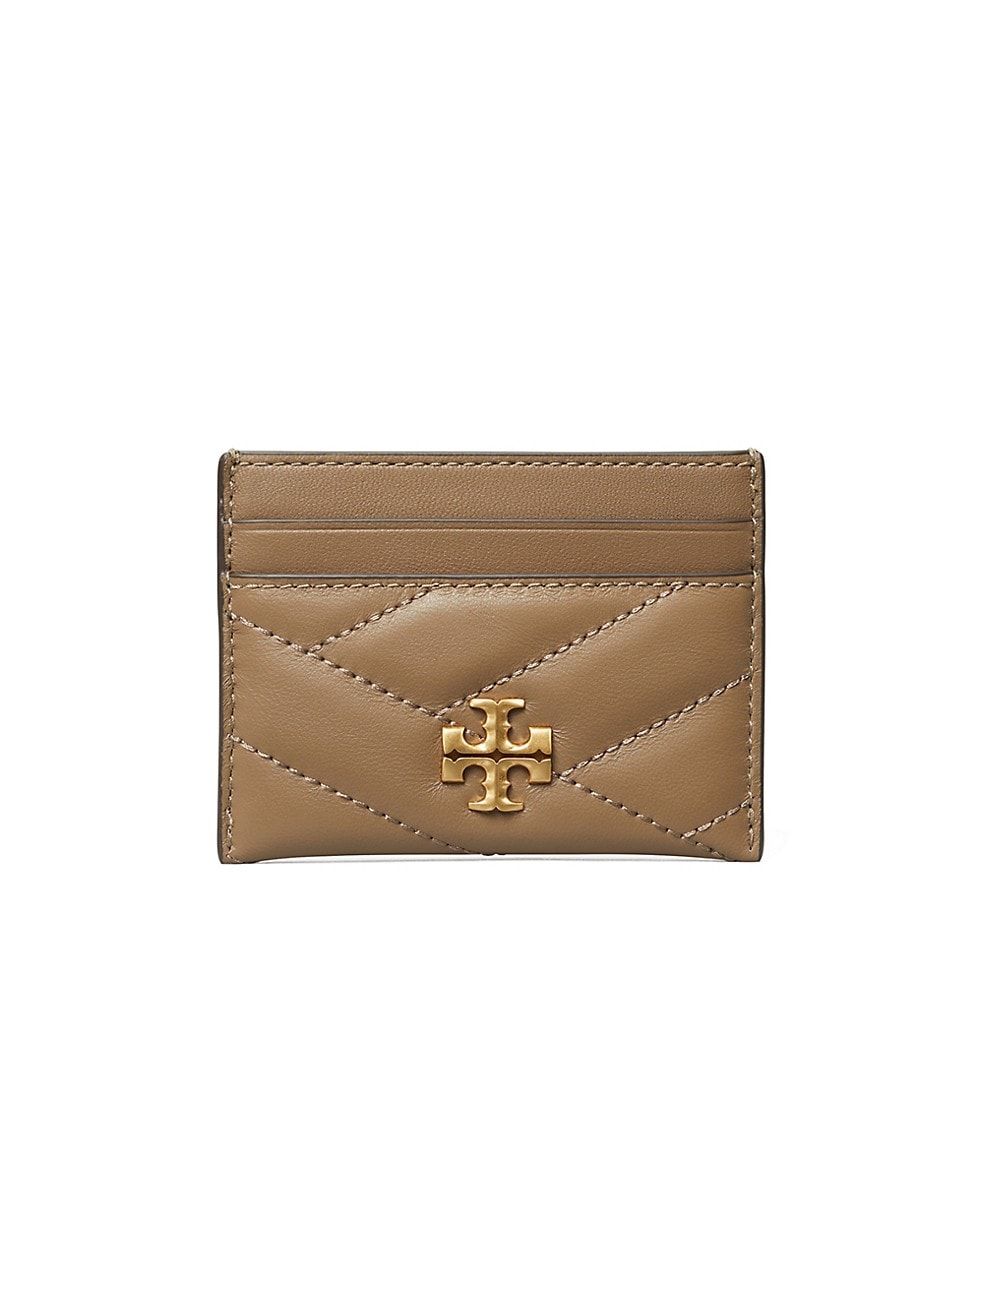 Tory Burch Kira Chevron Leather Card Case | Saks Fifth Avenue